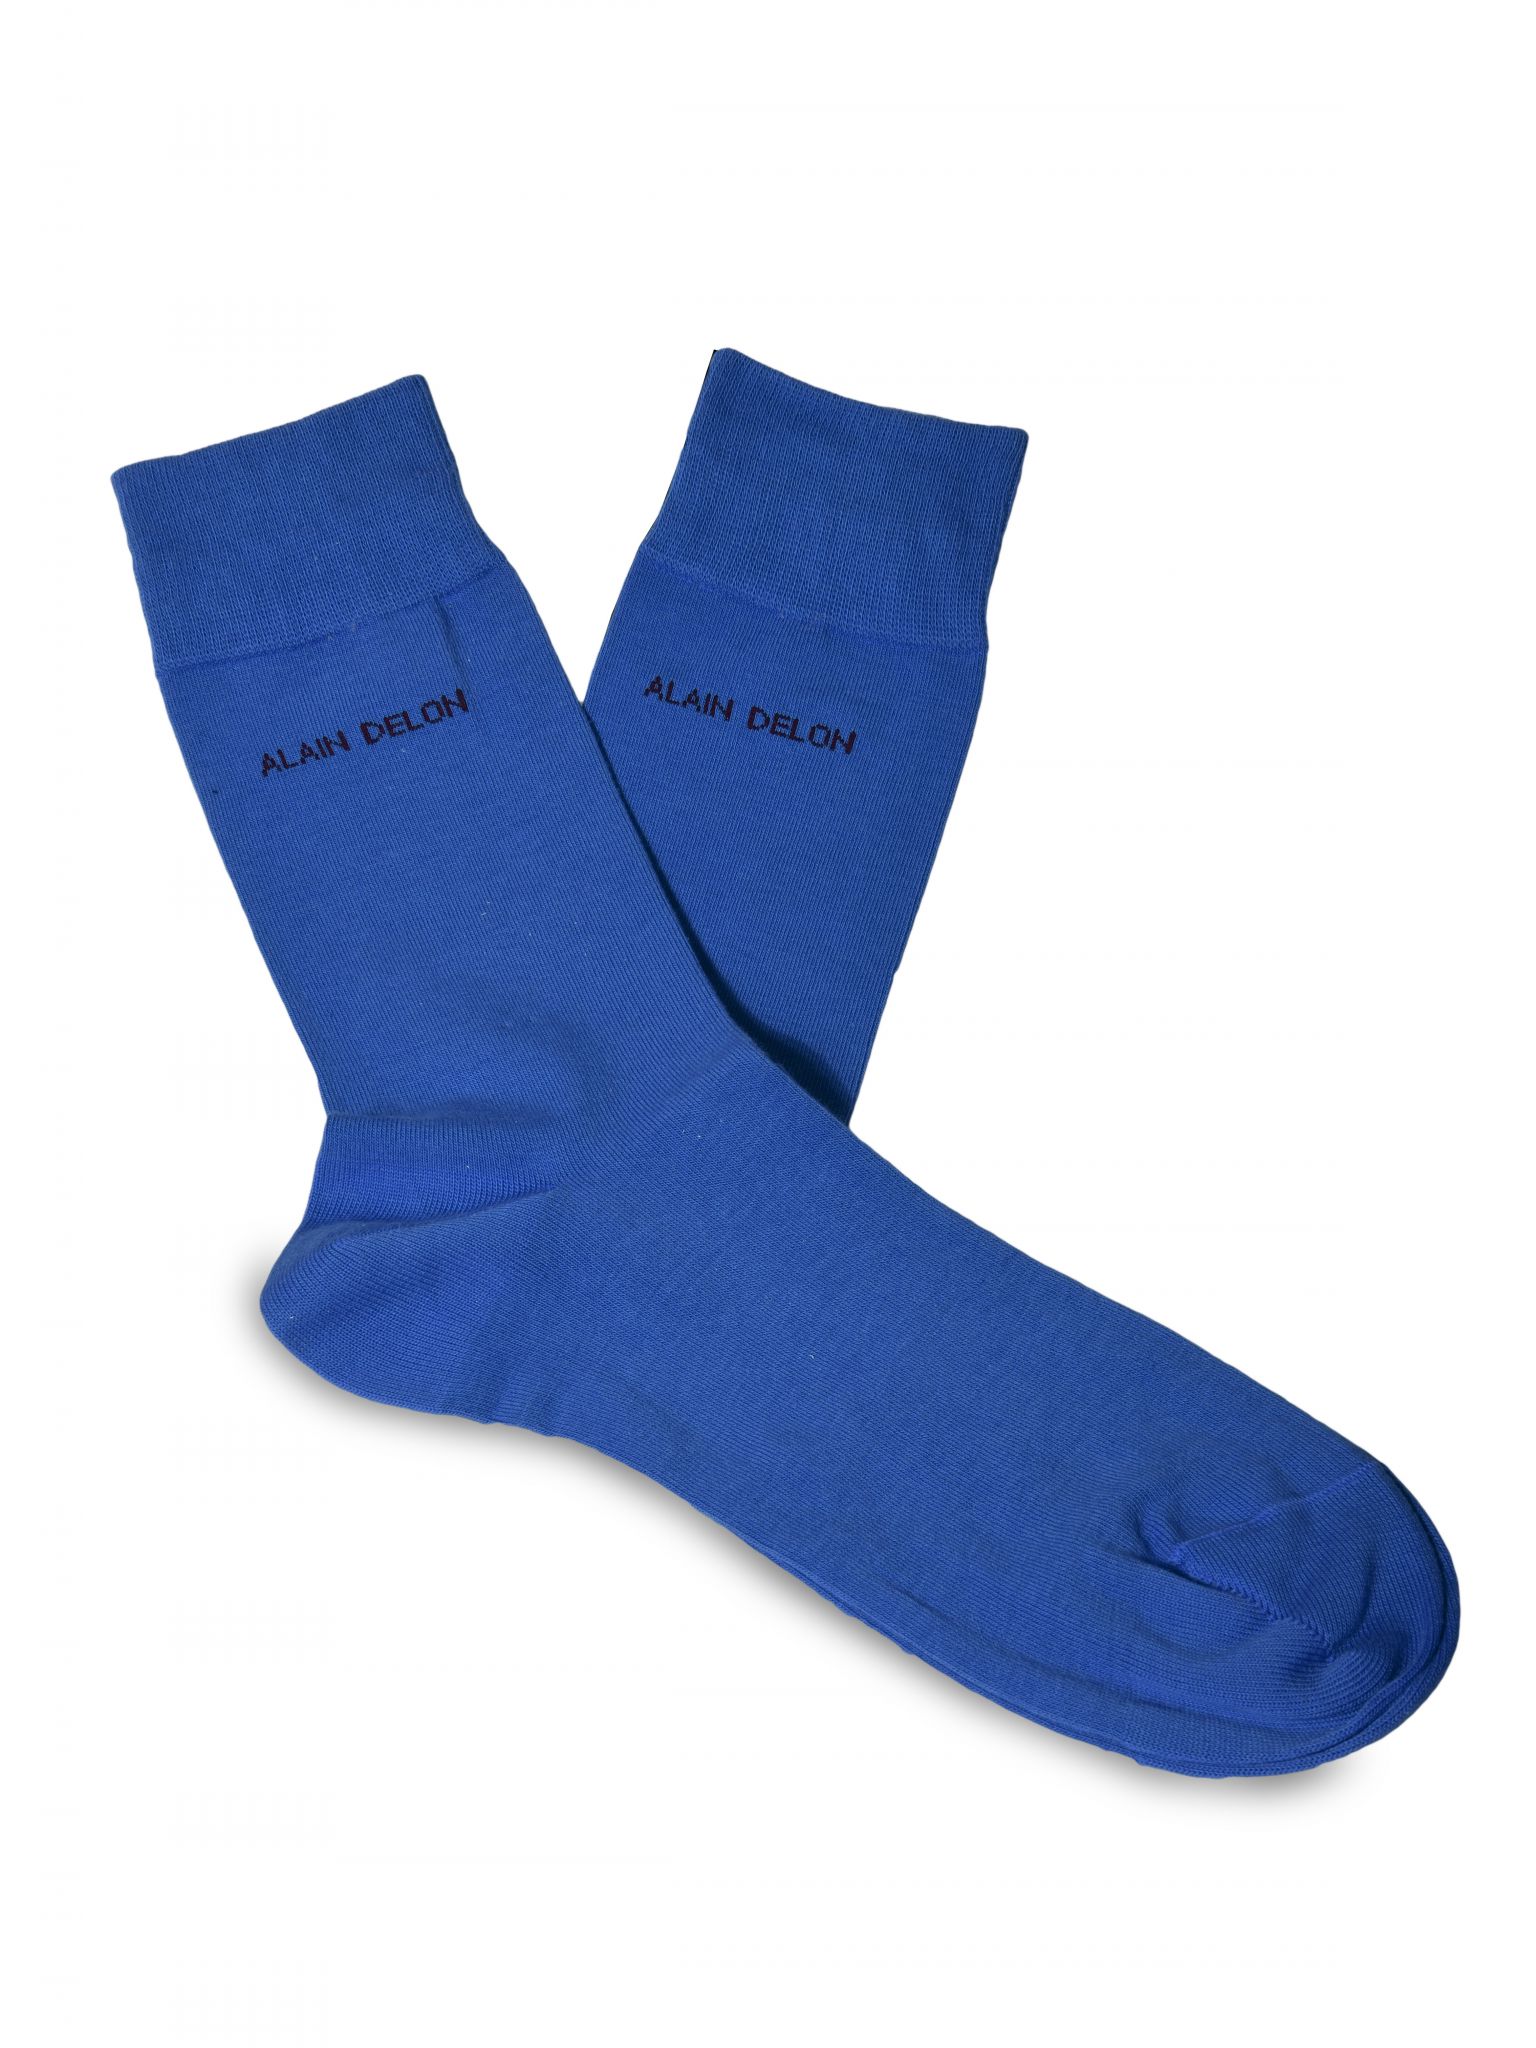 Set Of 3 Pairs Of Blue Socks Socks E Shop Uk